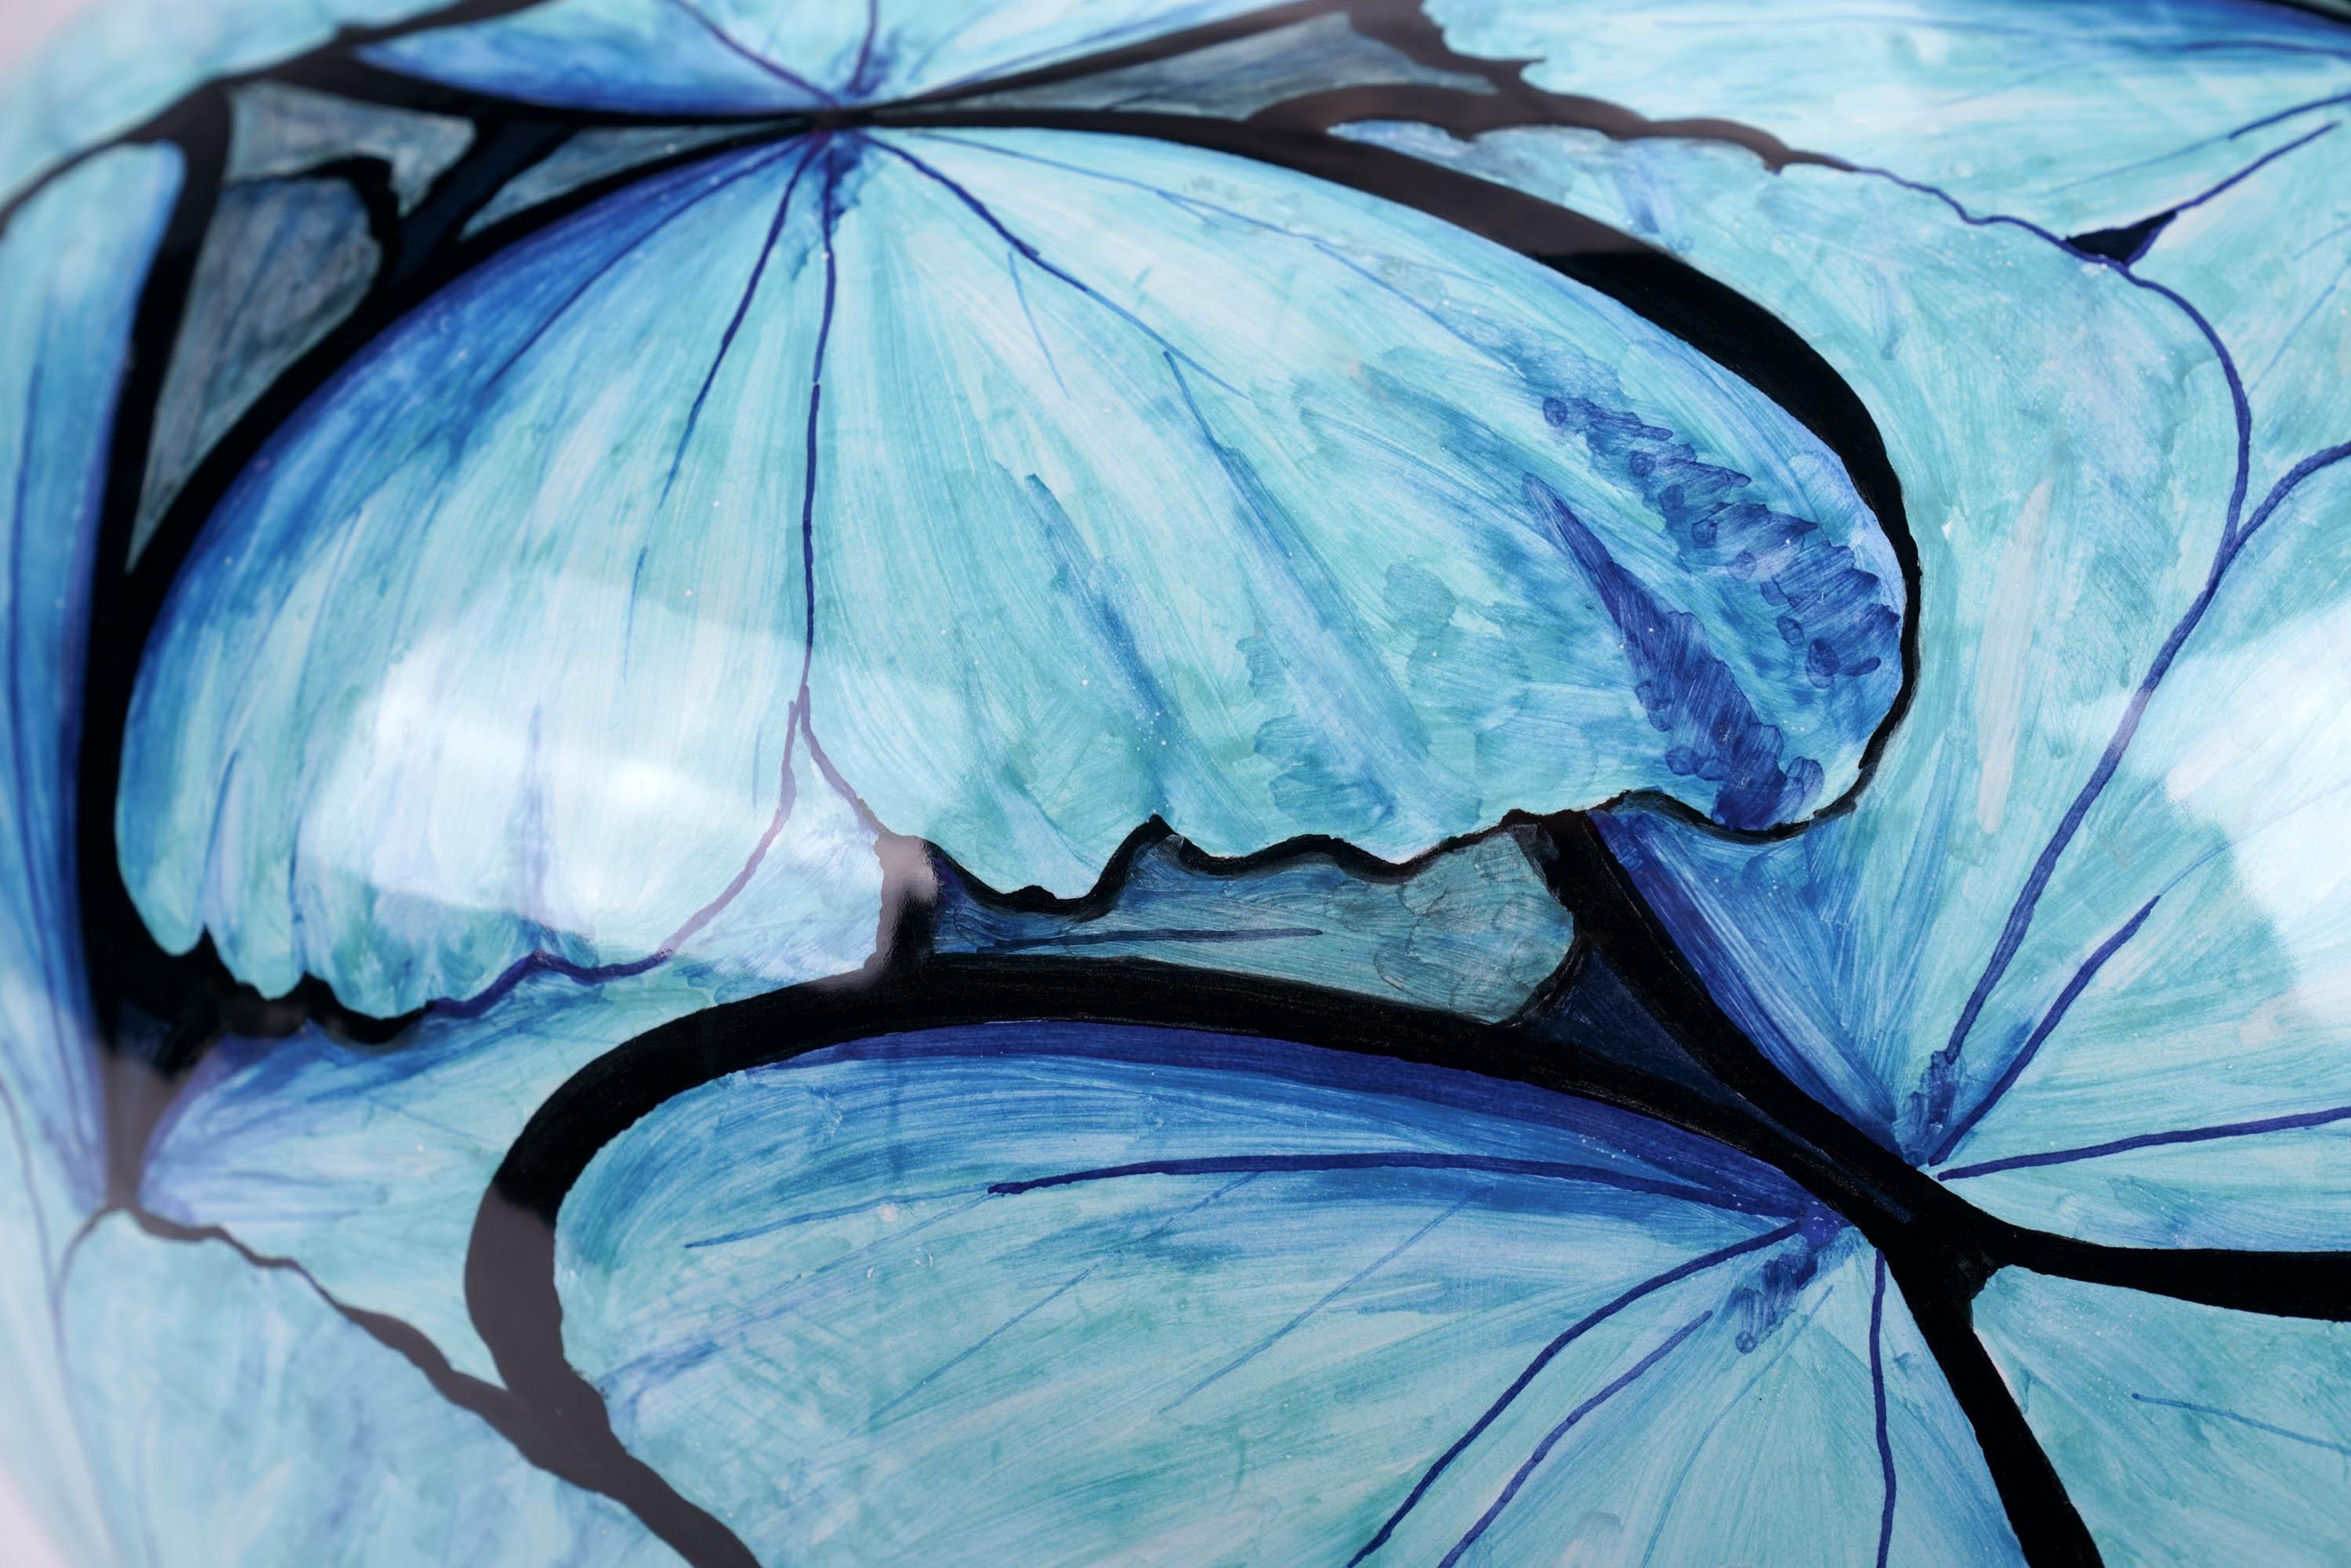 Blue Butterflies Vase, Vessel Glazed Ceramic, Majolica Ornament, Handmade Italy  For Sale 10